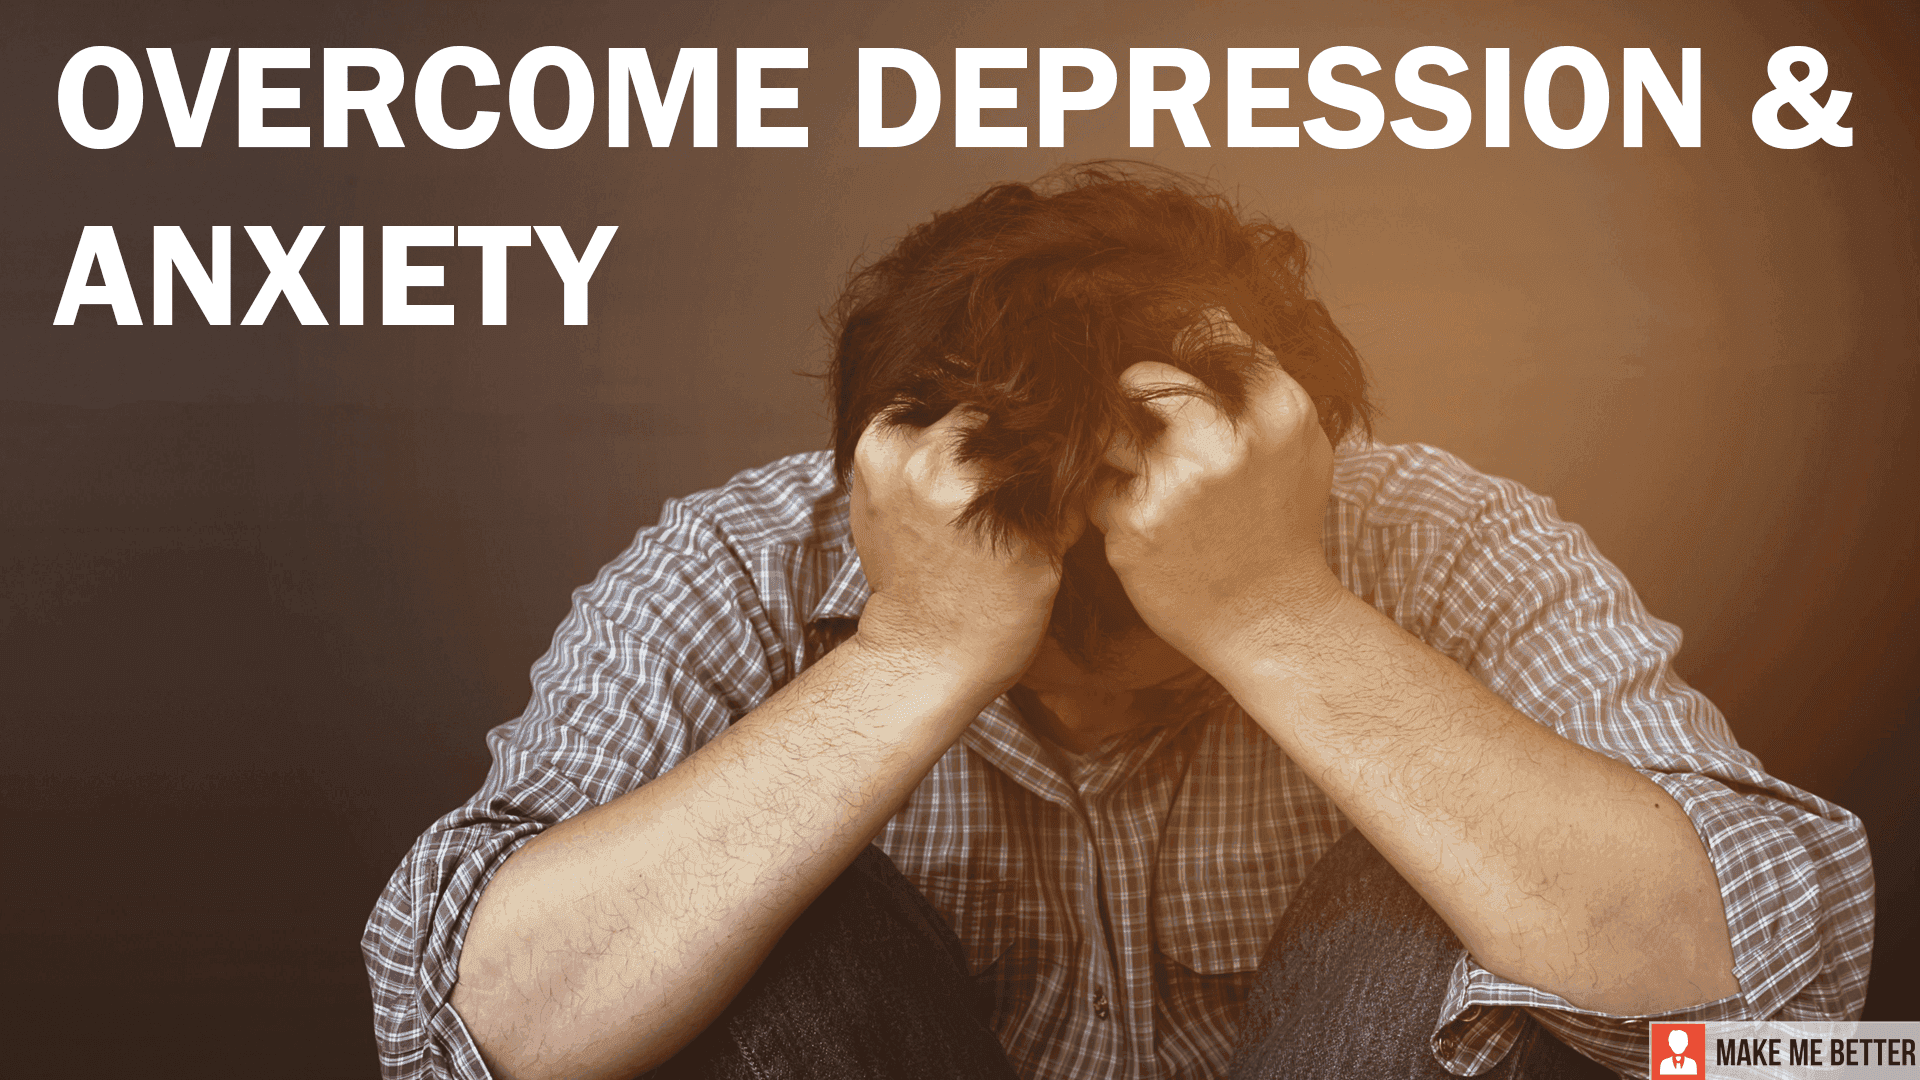 Steps to overcome depression